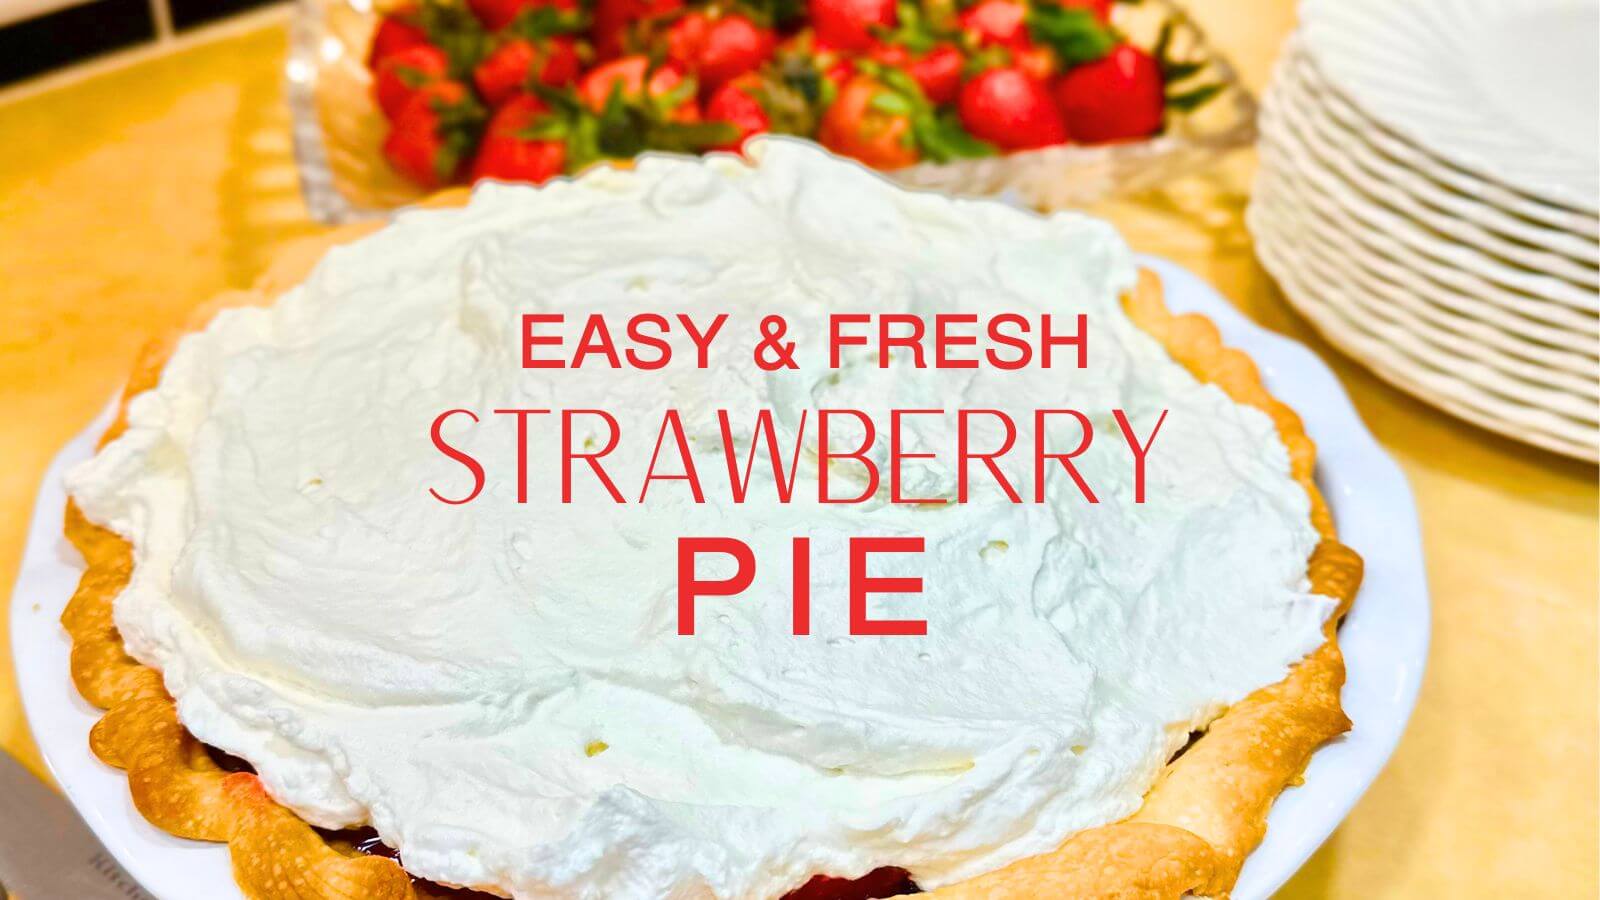 Easy and fresh strawberry pie recipe